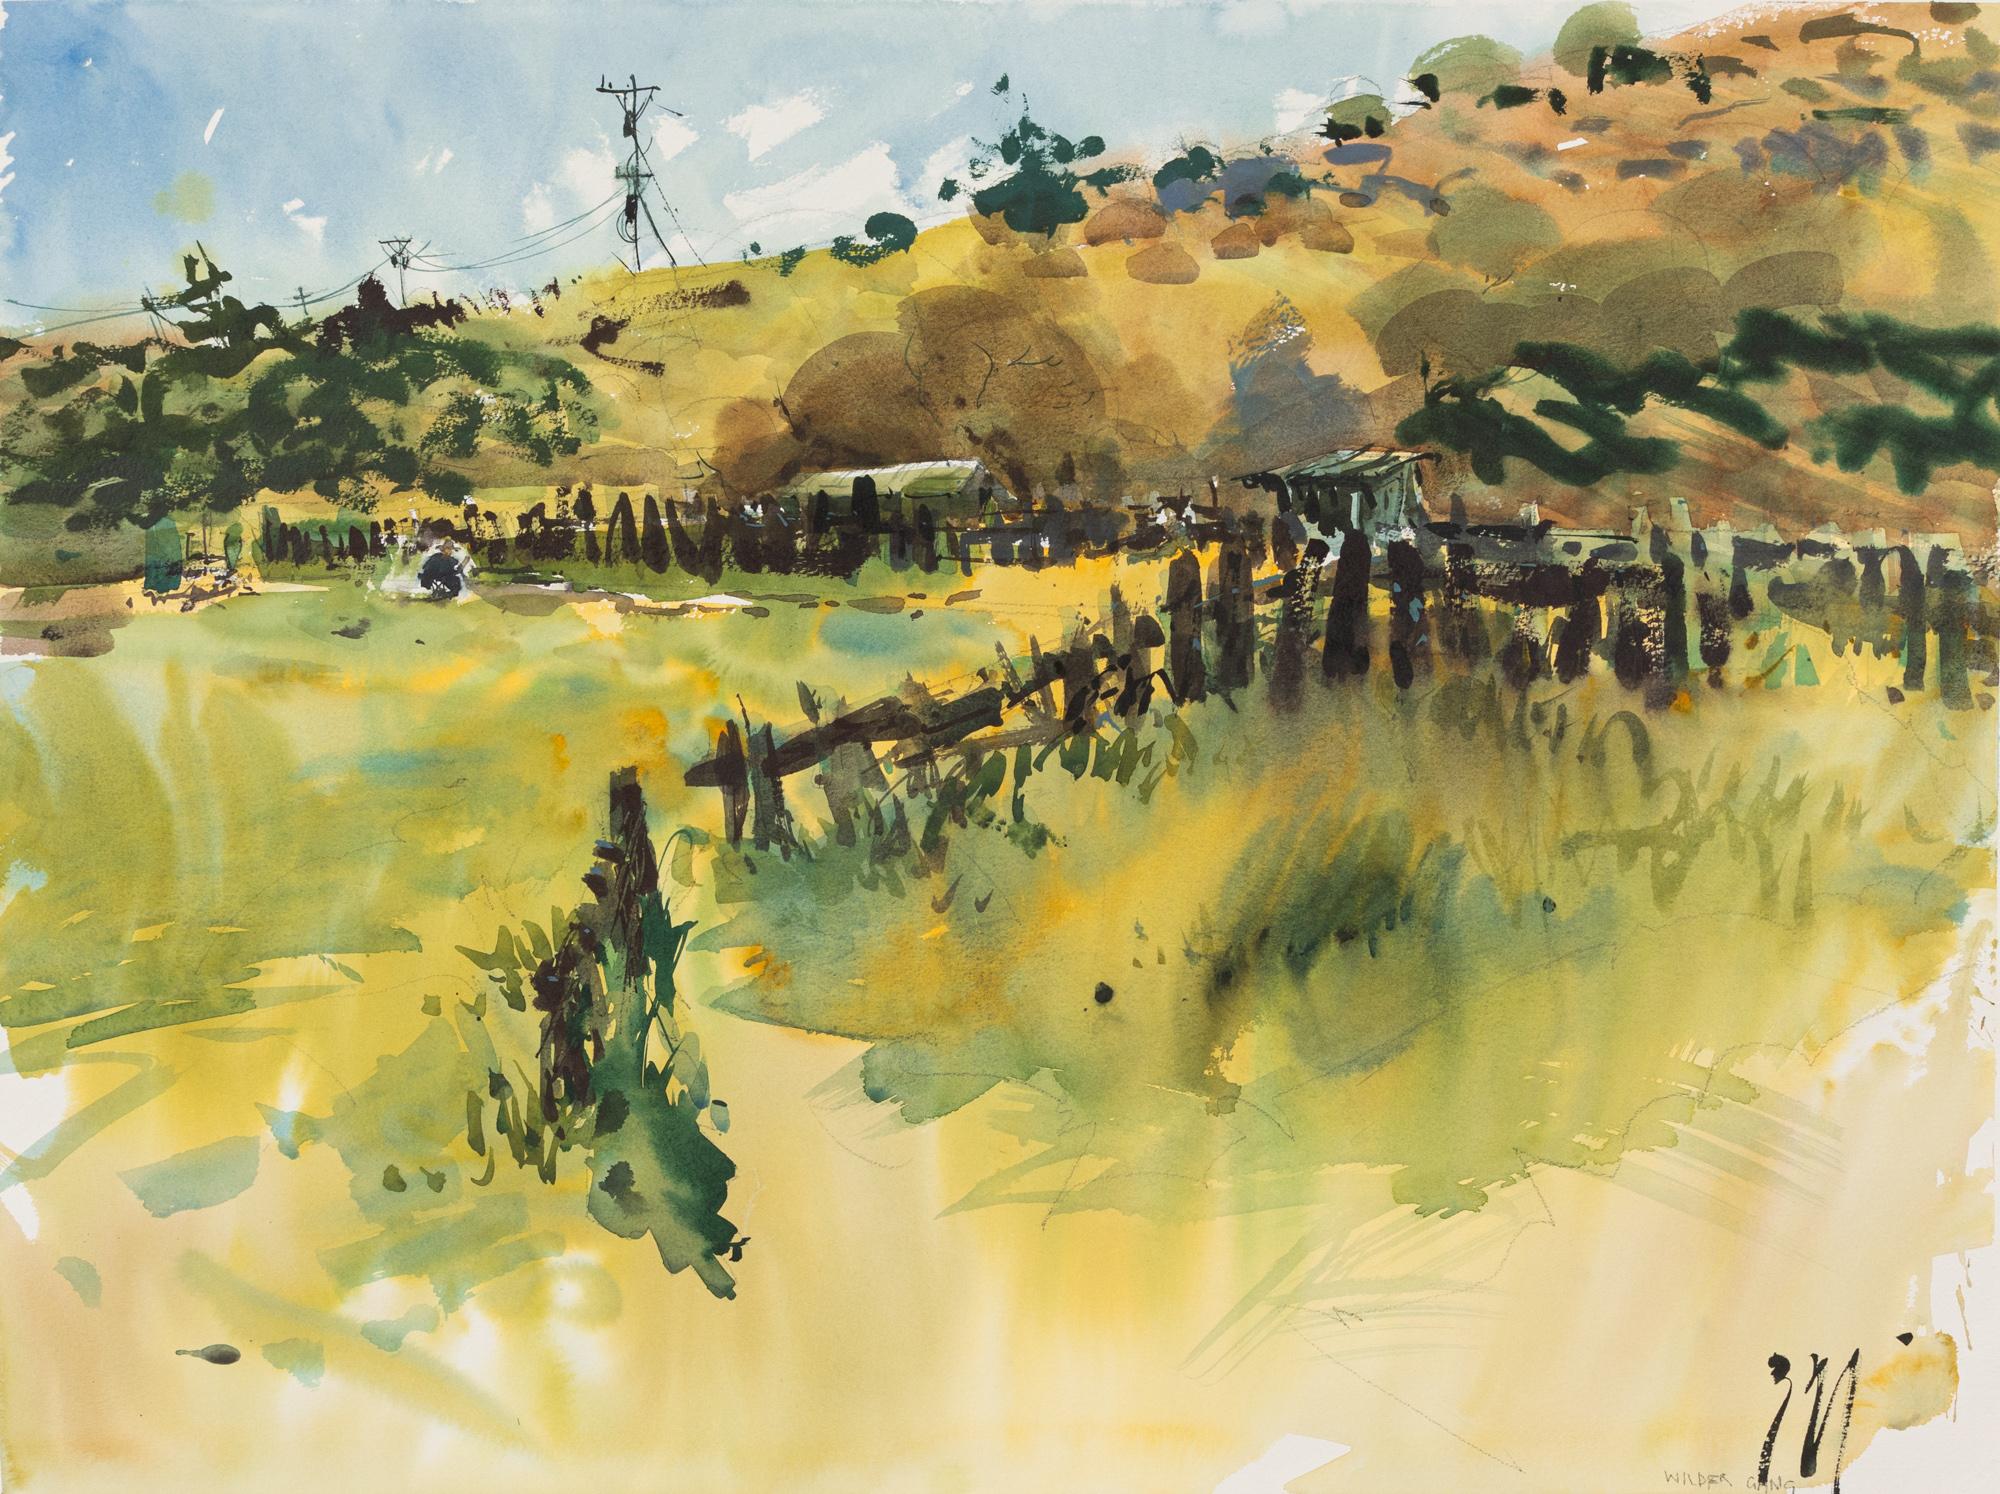 Uma Kelkar Landscape Painting - "Balmy Day in Santa Cruz" A Plein Air Watercolor Painting of Santa Cruz, CA